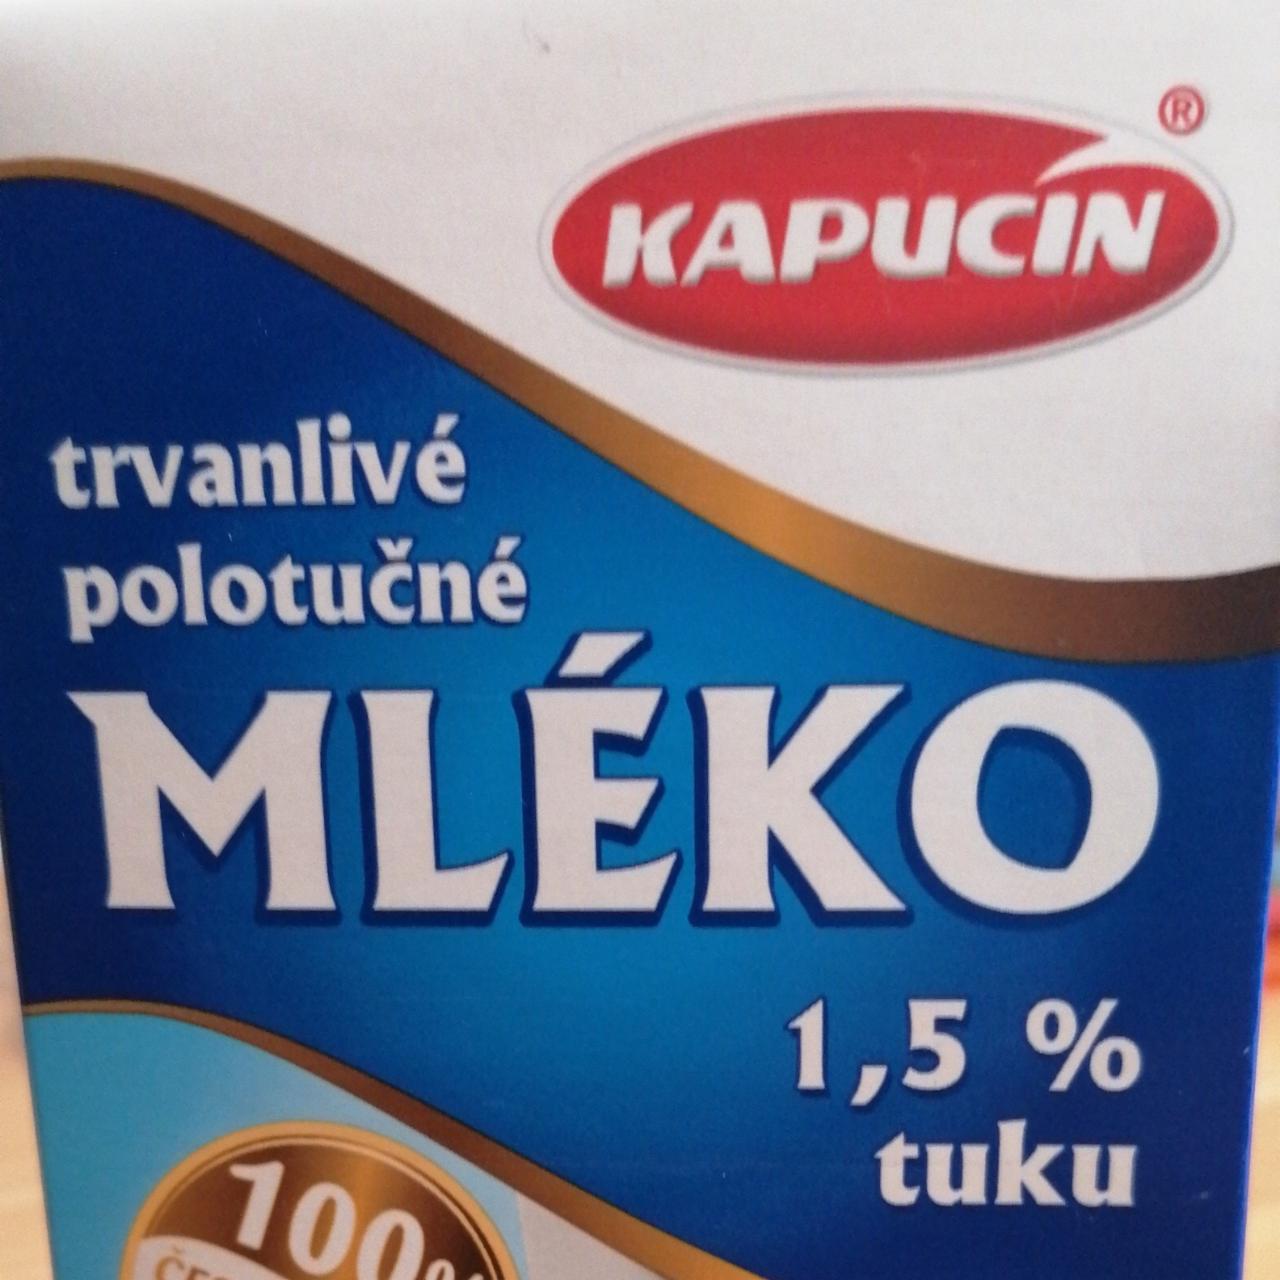 Fotografie - Mléko trvanlivé polotučné 1,5% tuku Kapucín